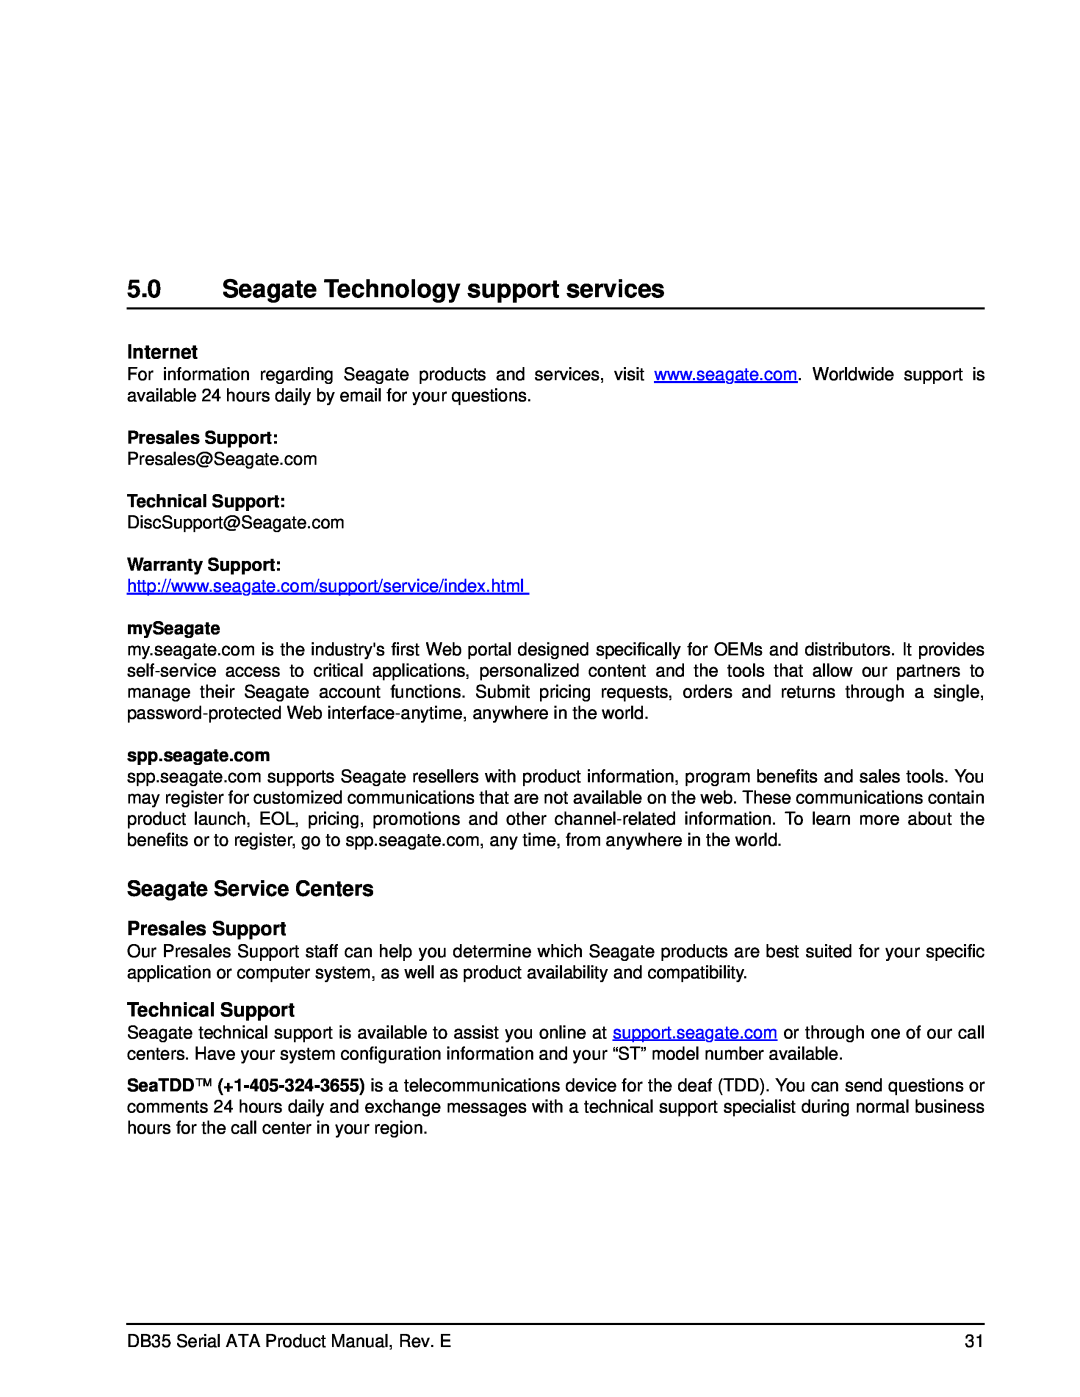 Seagate ST3400832SCE Seagate Technology support services, Seagate Service Centers, Internet, Presales Support, mySeagate 